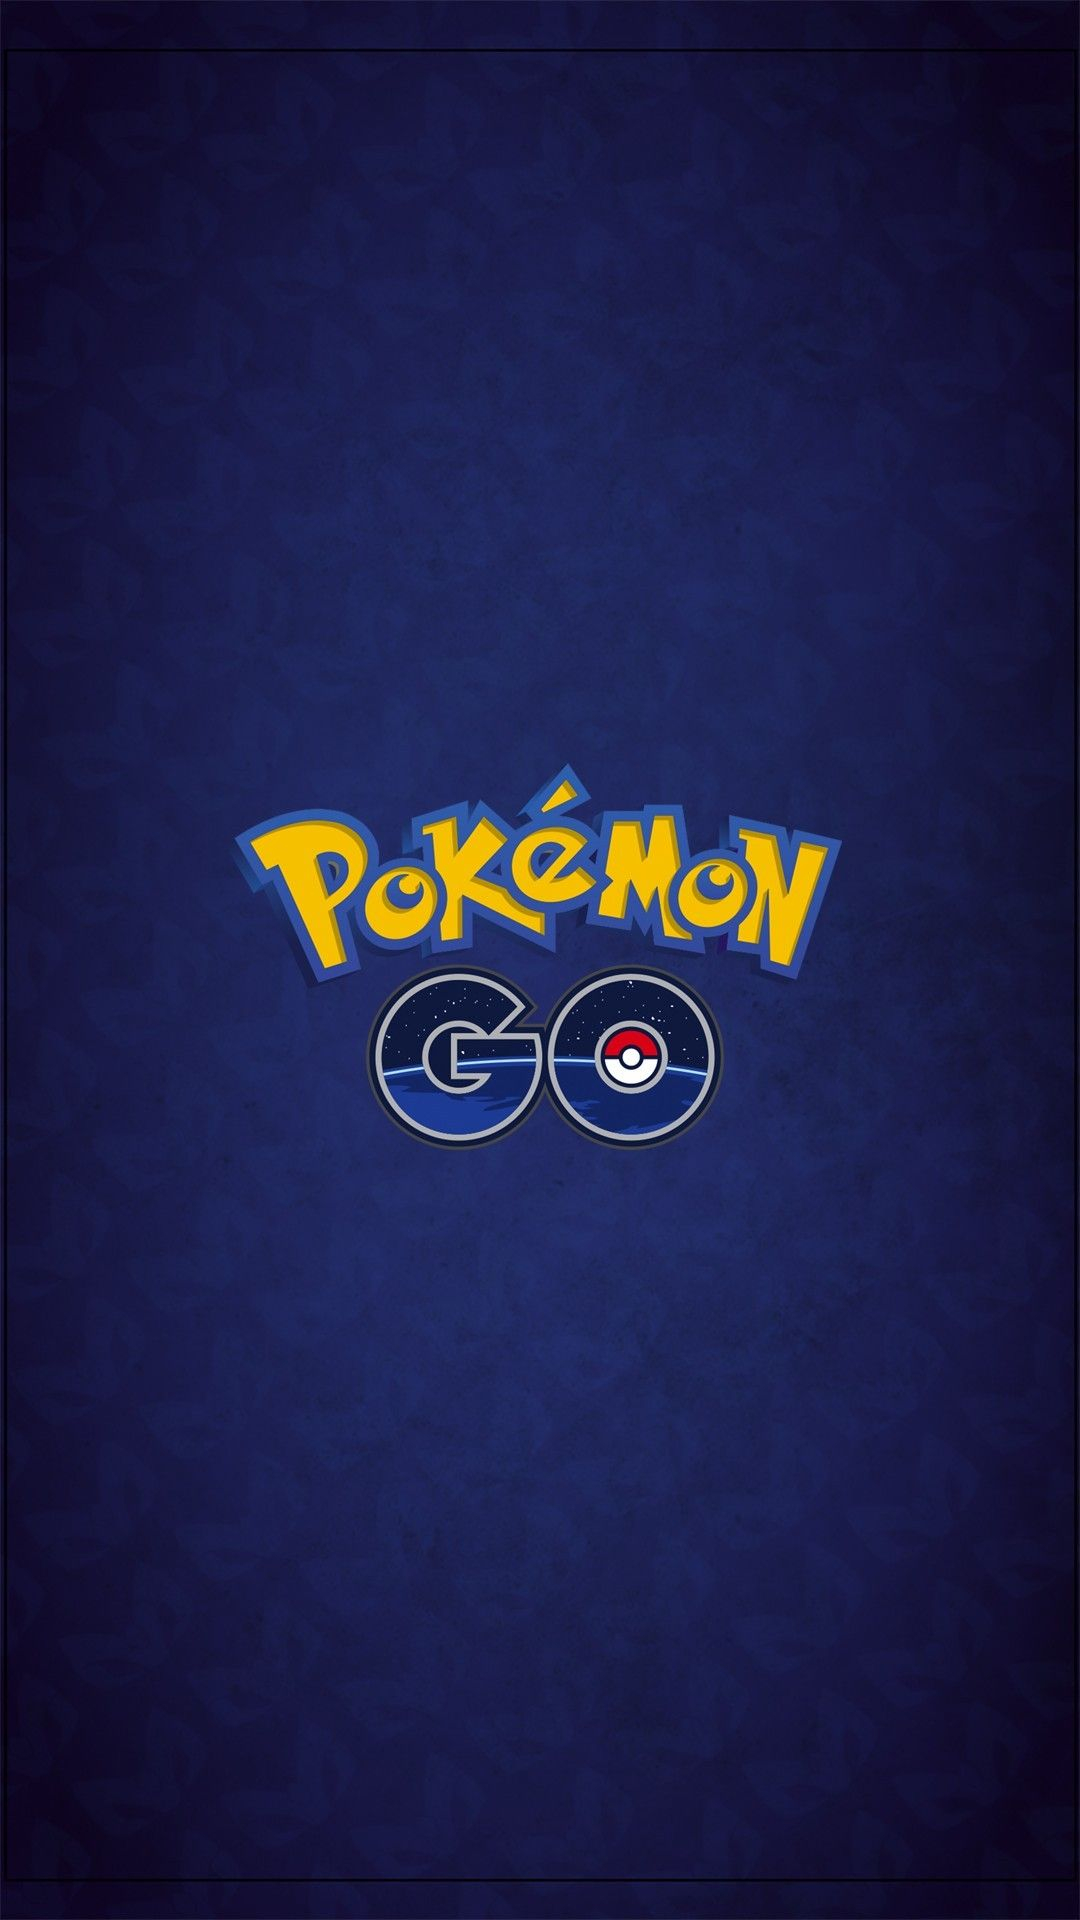 1080x1920 Pokemon Go iPhone Wallpapers Top Free Pokemon Go iPhone Backgrounds